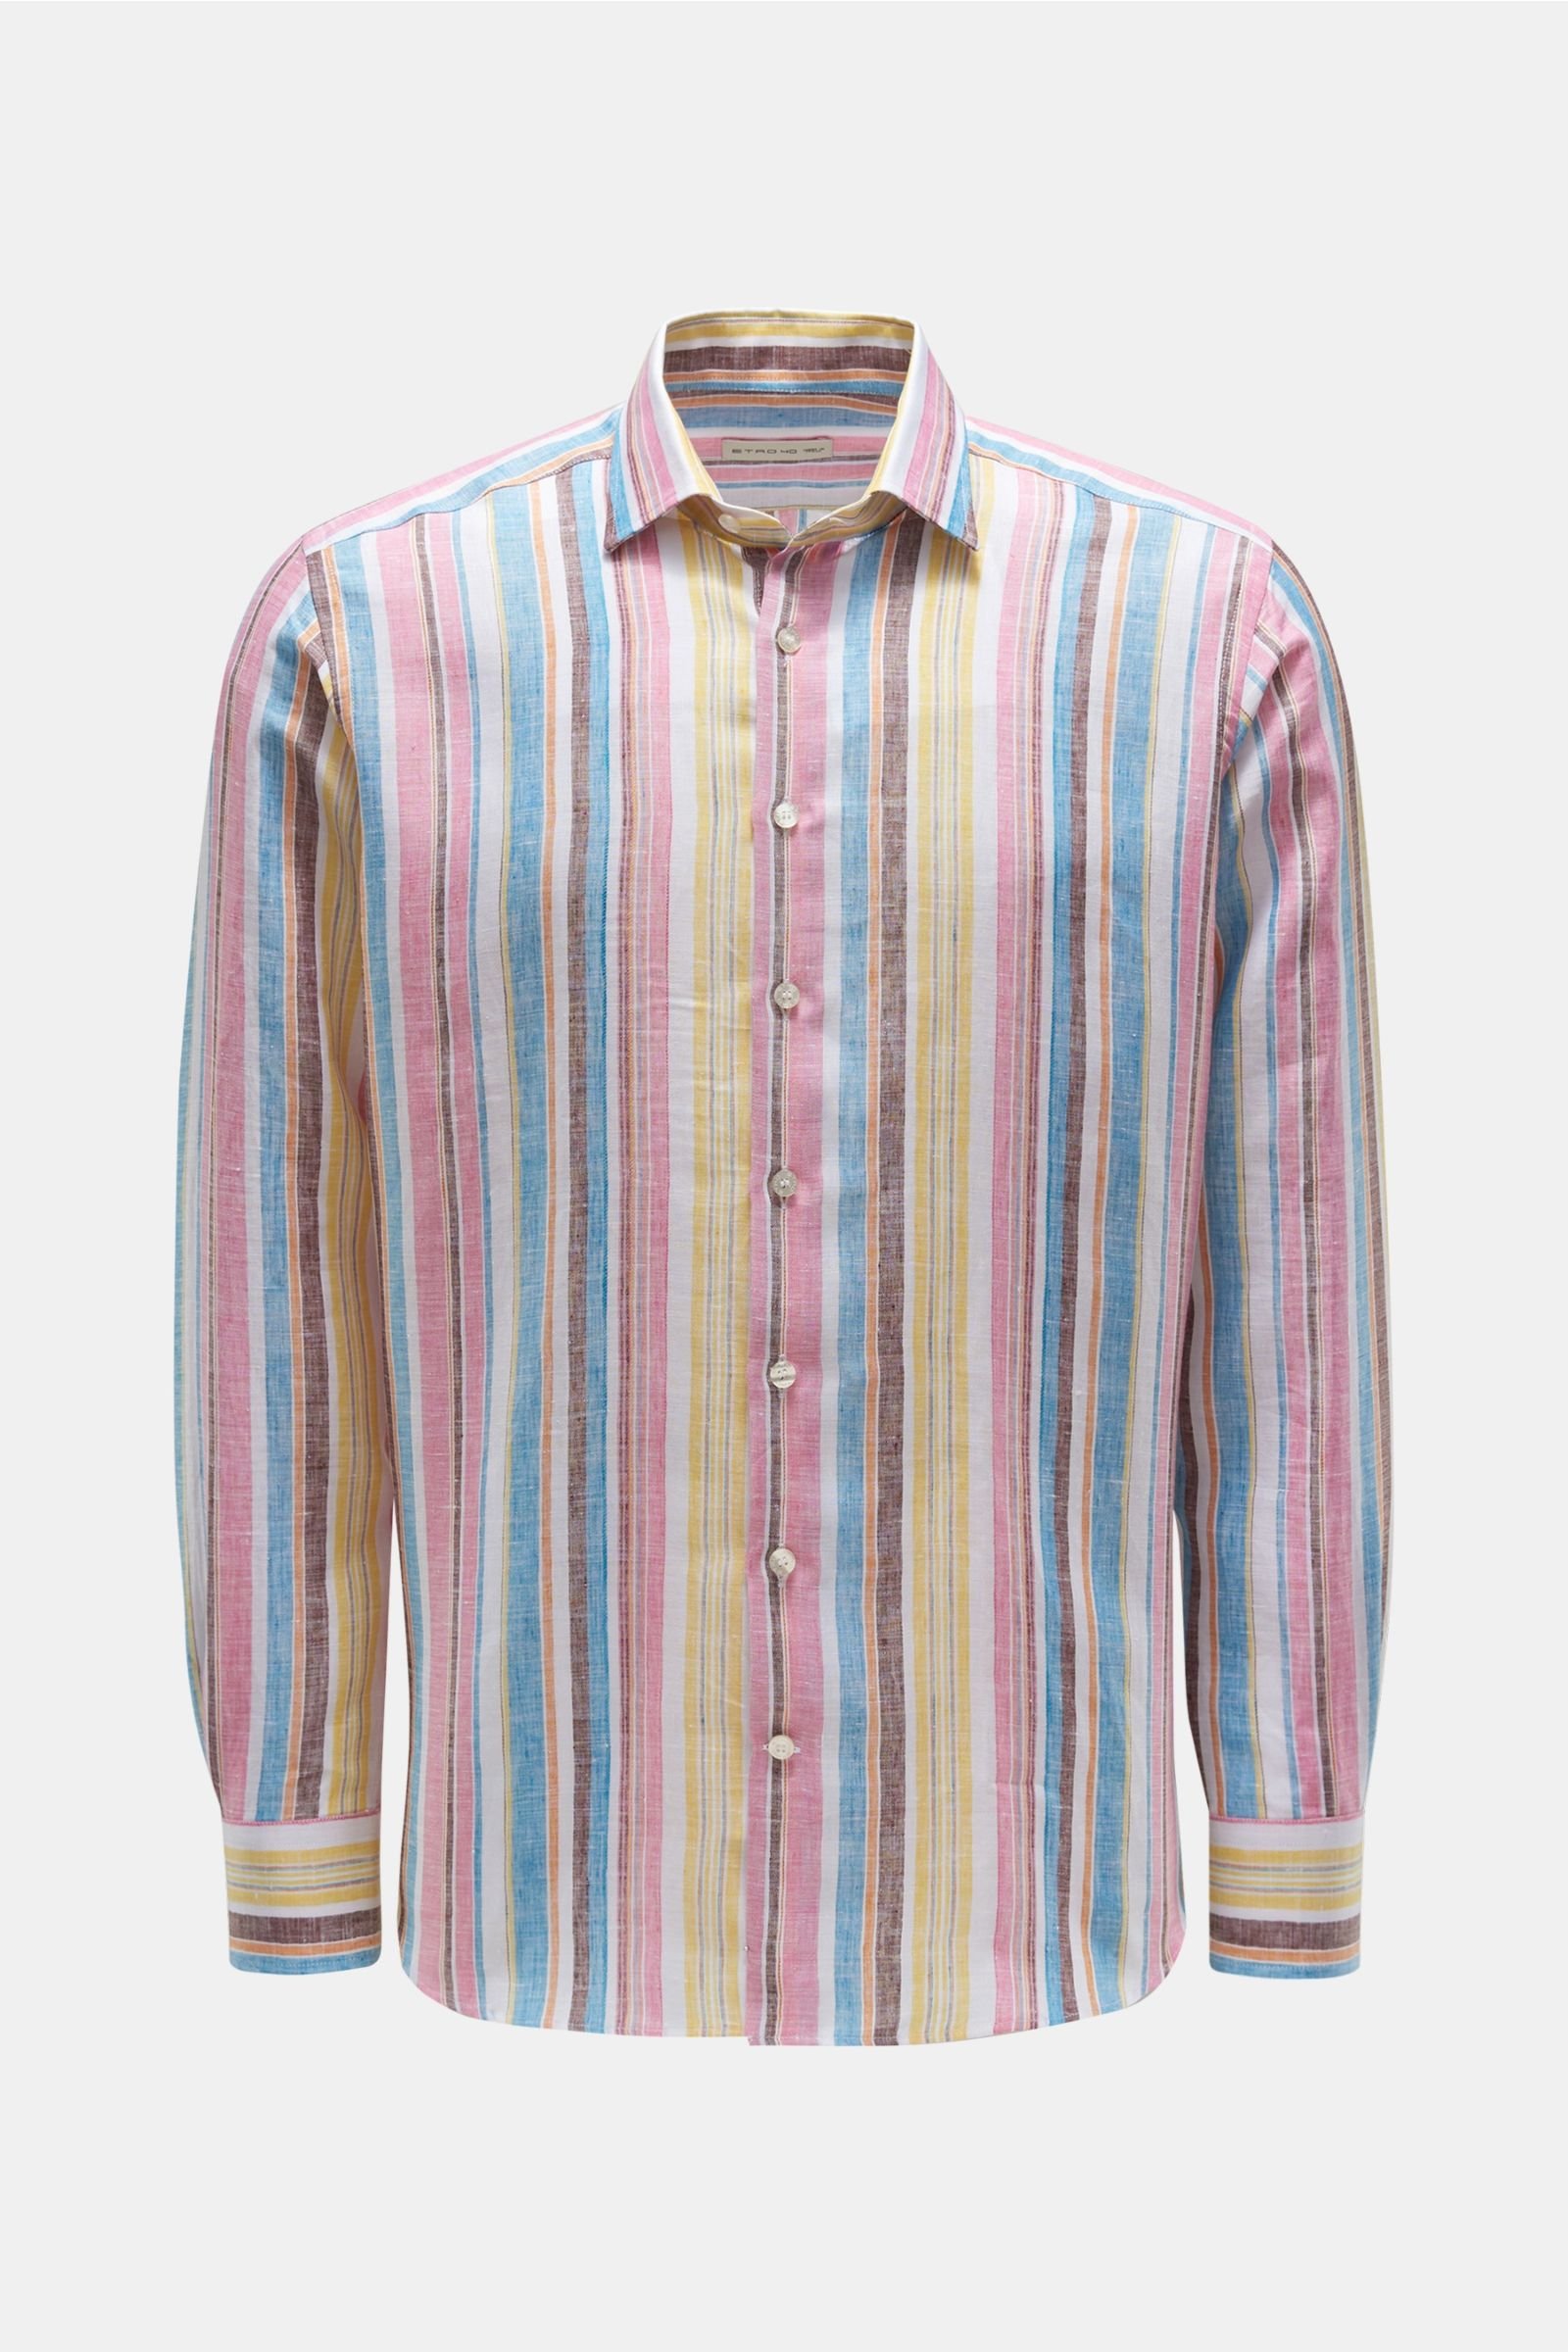 Linen shirt slim collar rose/yellow/turquoise striped